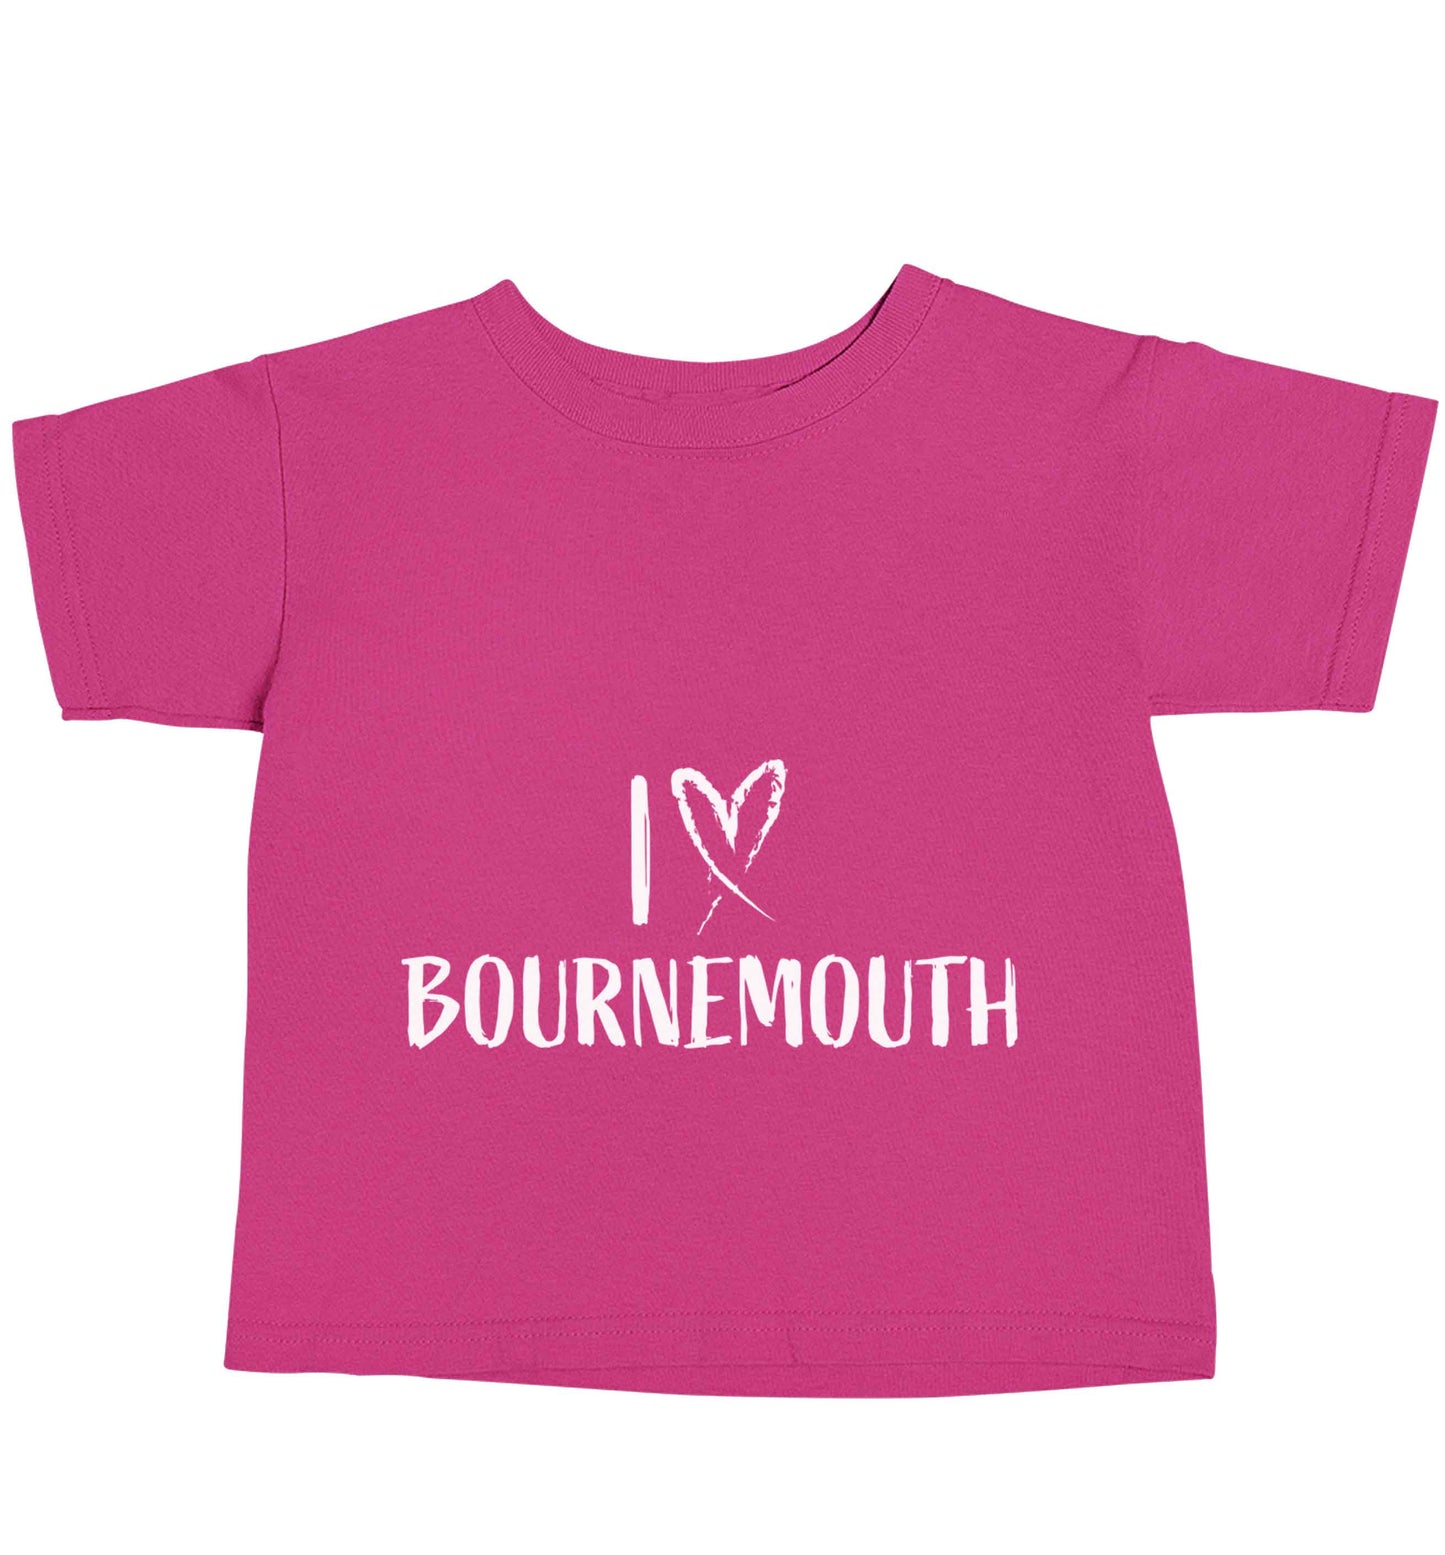 I love Bournemouth pink baby toddler Tshirt 2 Years